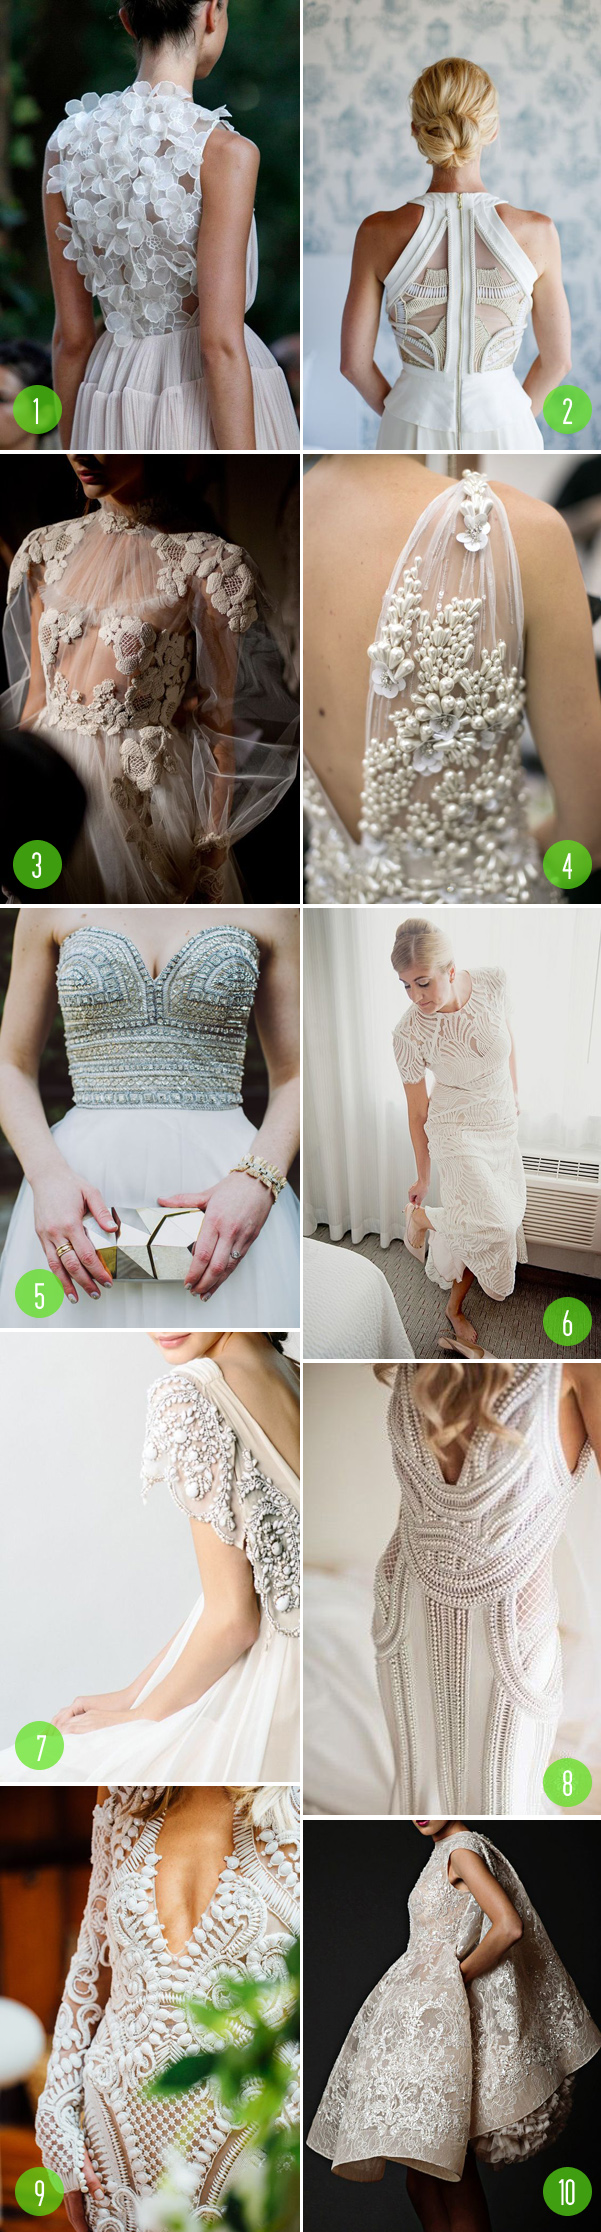 Top 10: Wedding dress details